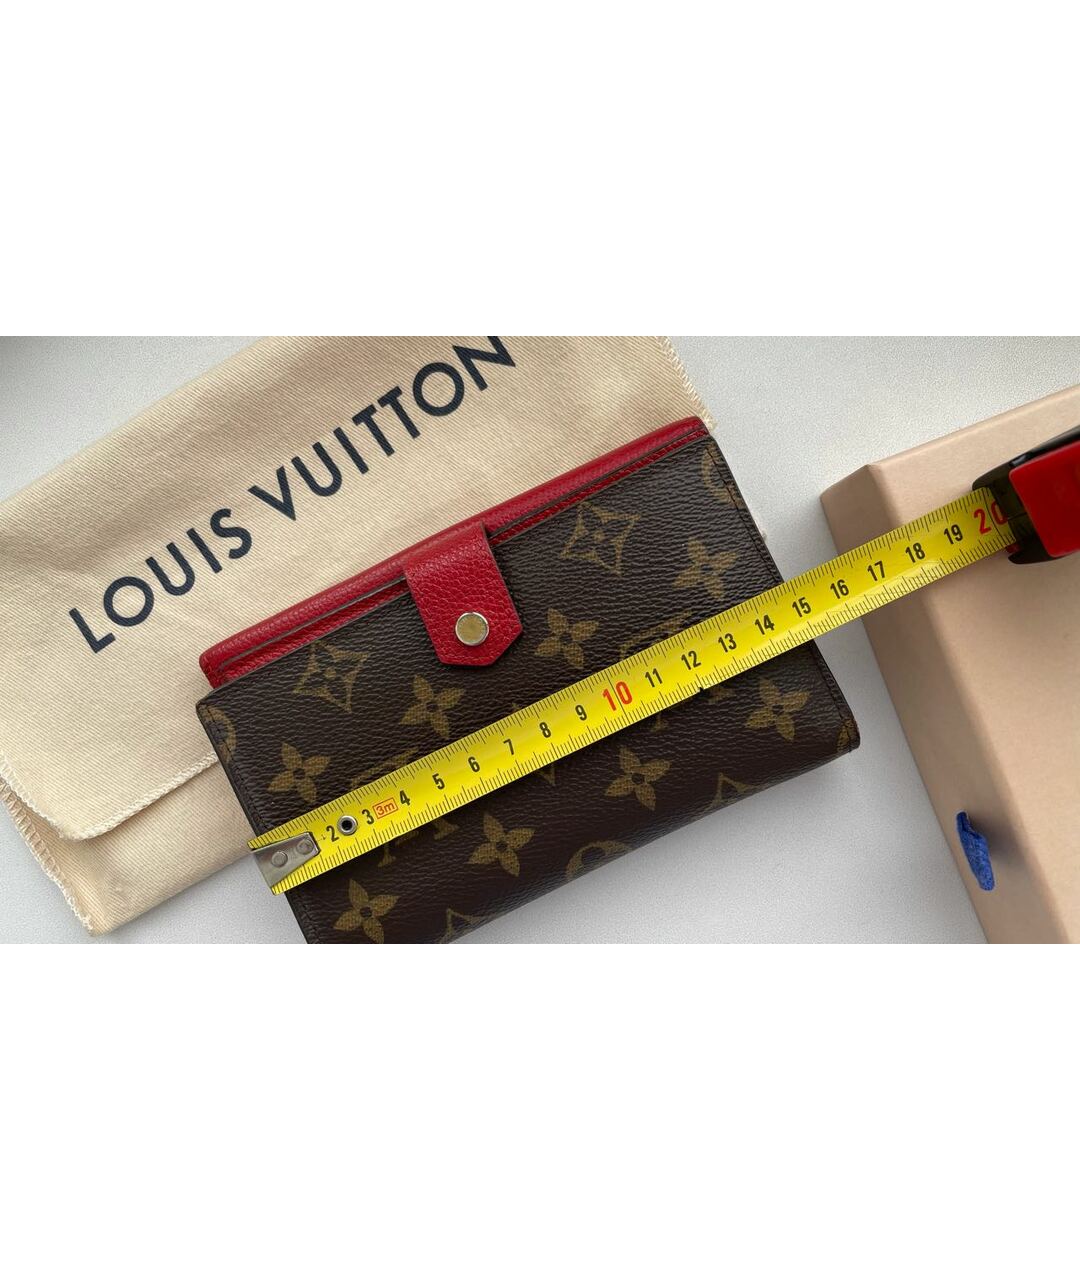 LOUIS VUITTON PRE-OWNED Коричневый кожаный кошелек, фото 6